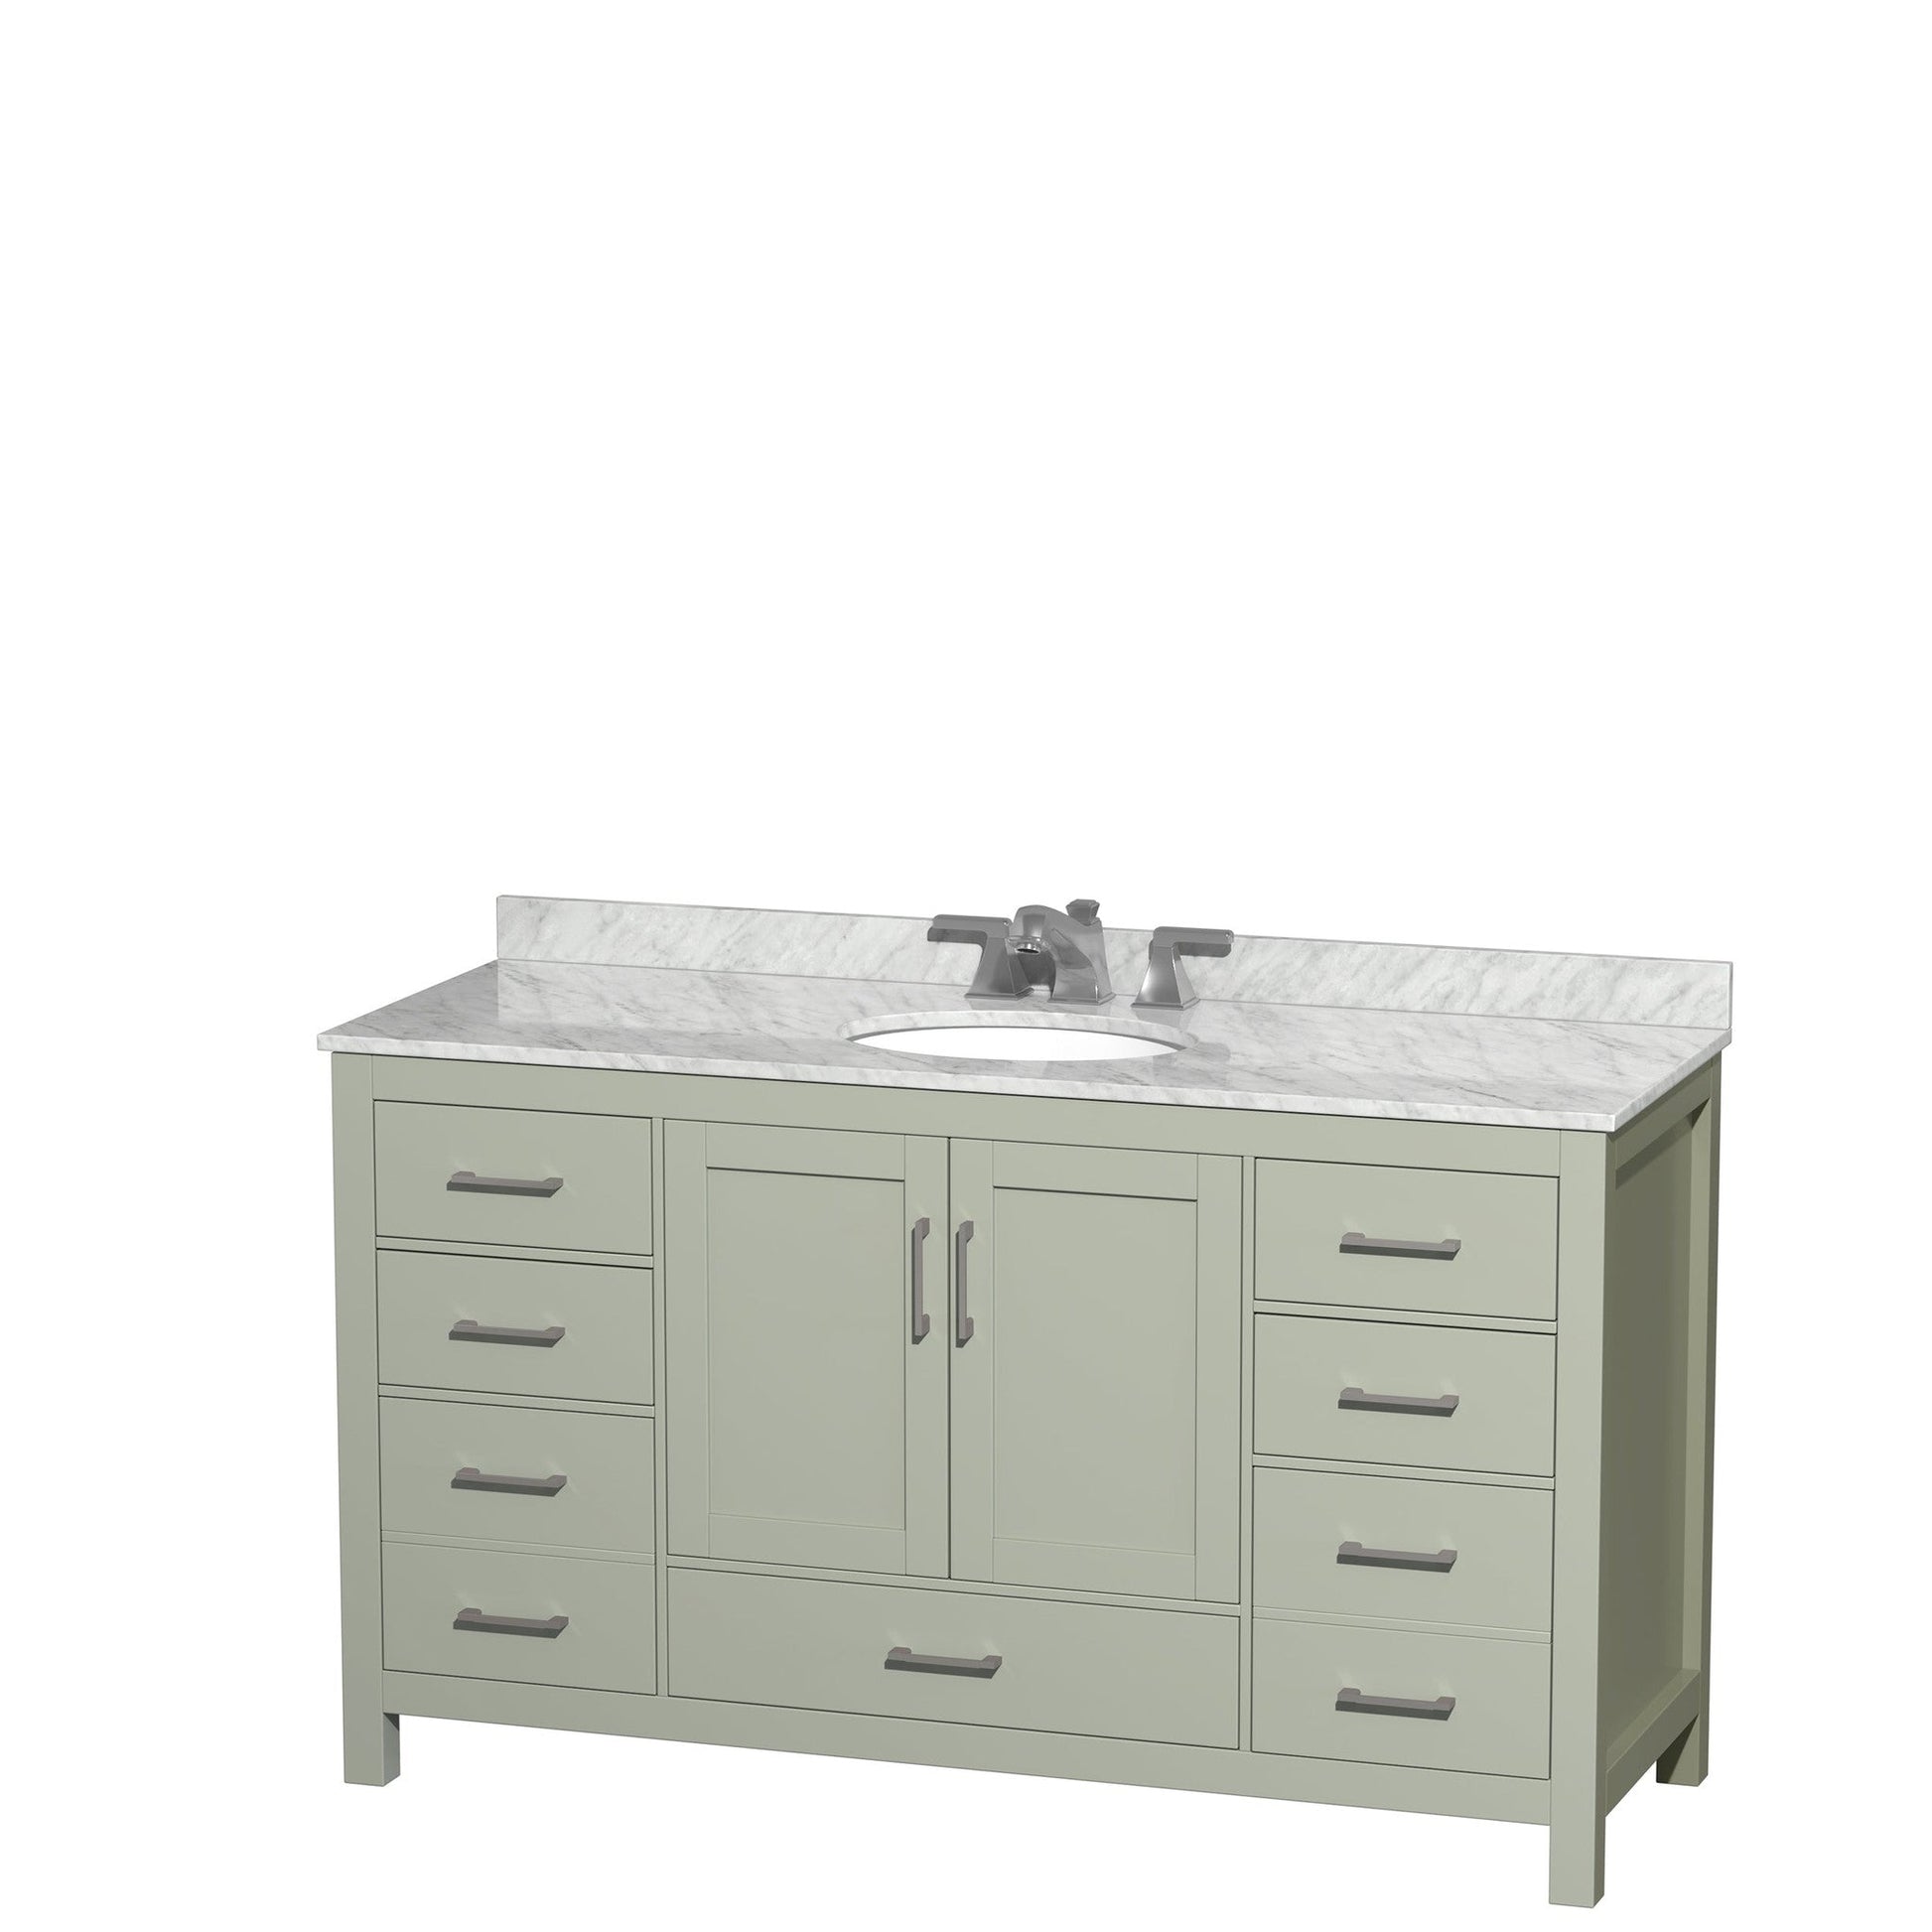 Sheffield 60" Single Bathroom Vanity in Light Green, White Carrara Marble Countertop, Undermount Oval Sink, Brushed Nickel Trim